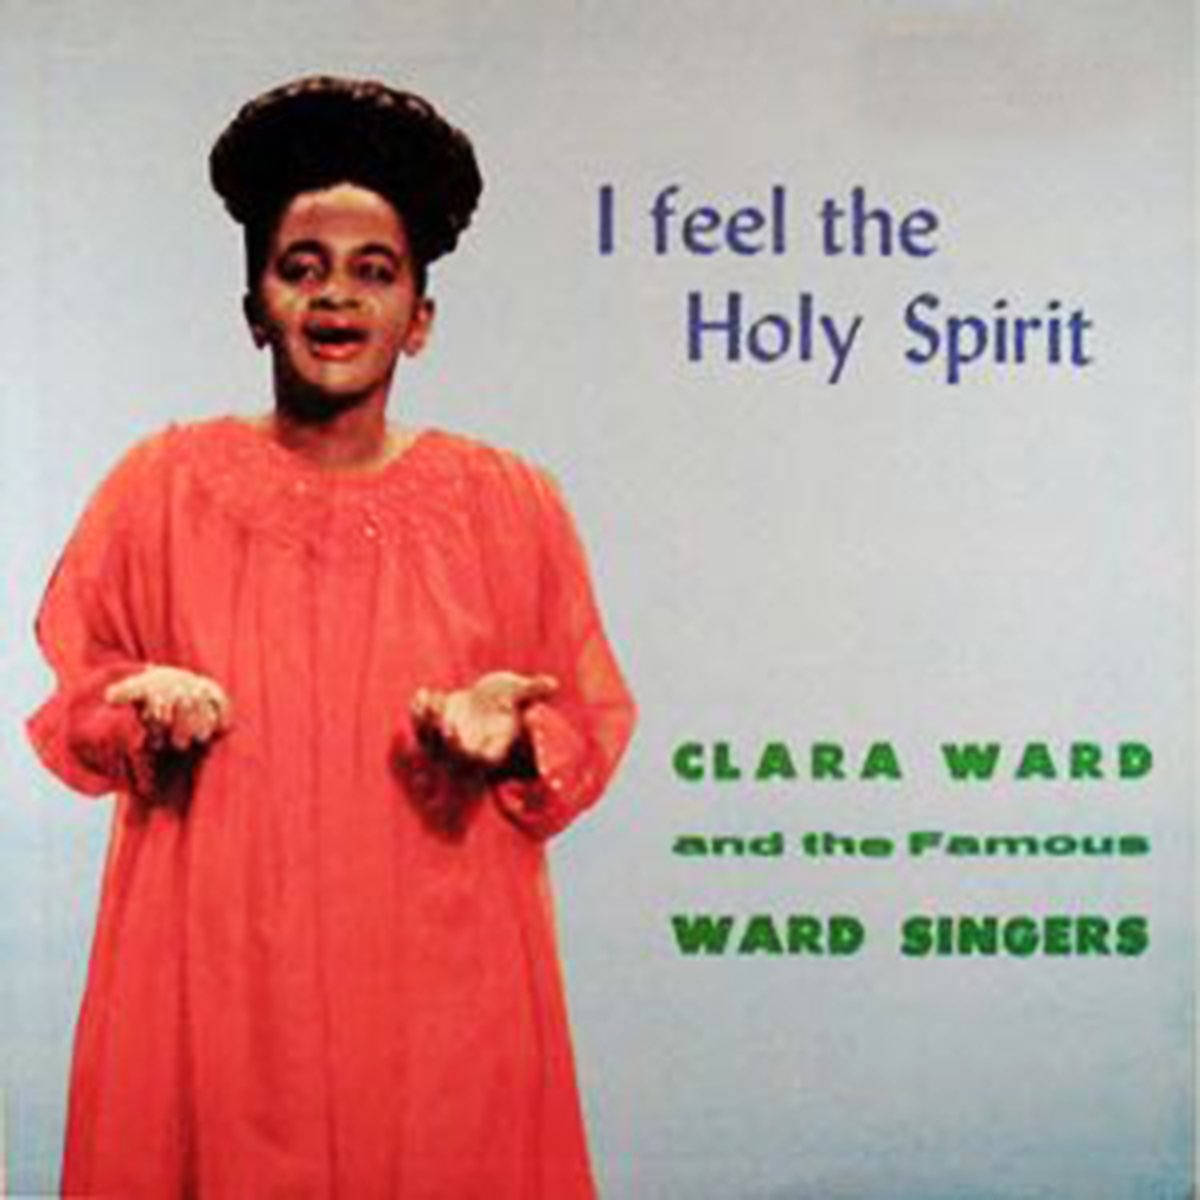 Download Famous Clara Ward Singers Wallpaper 